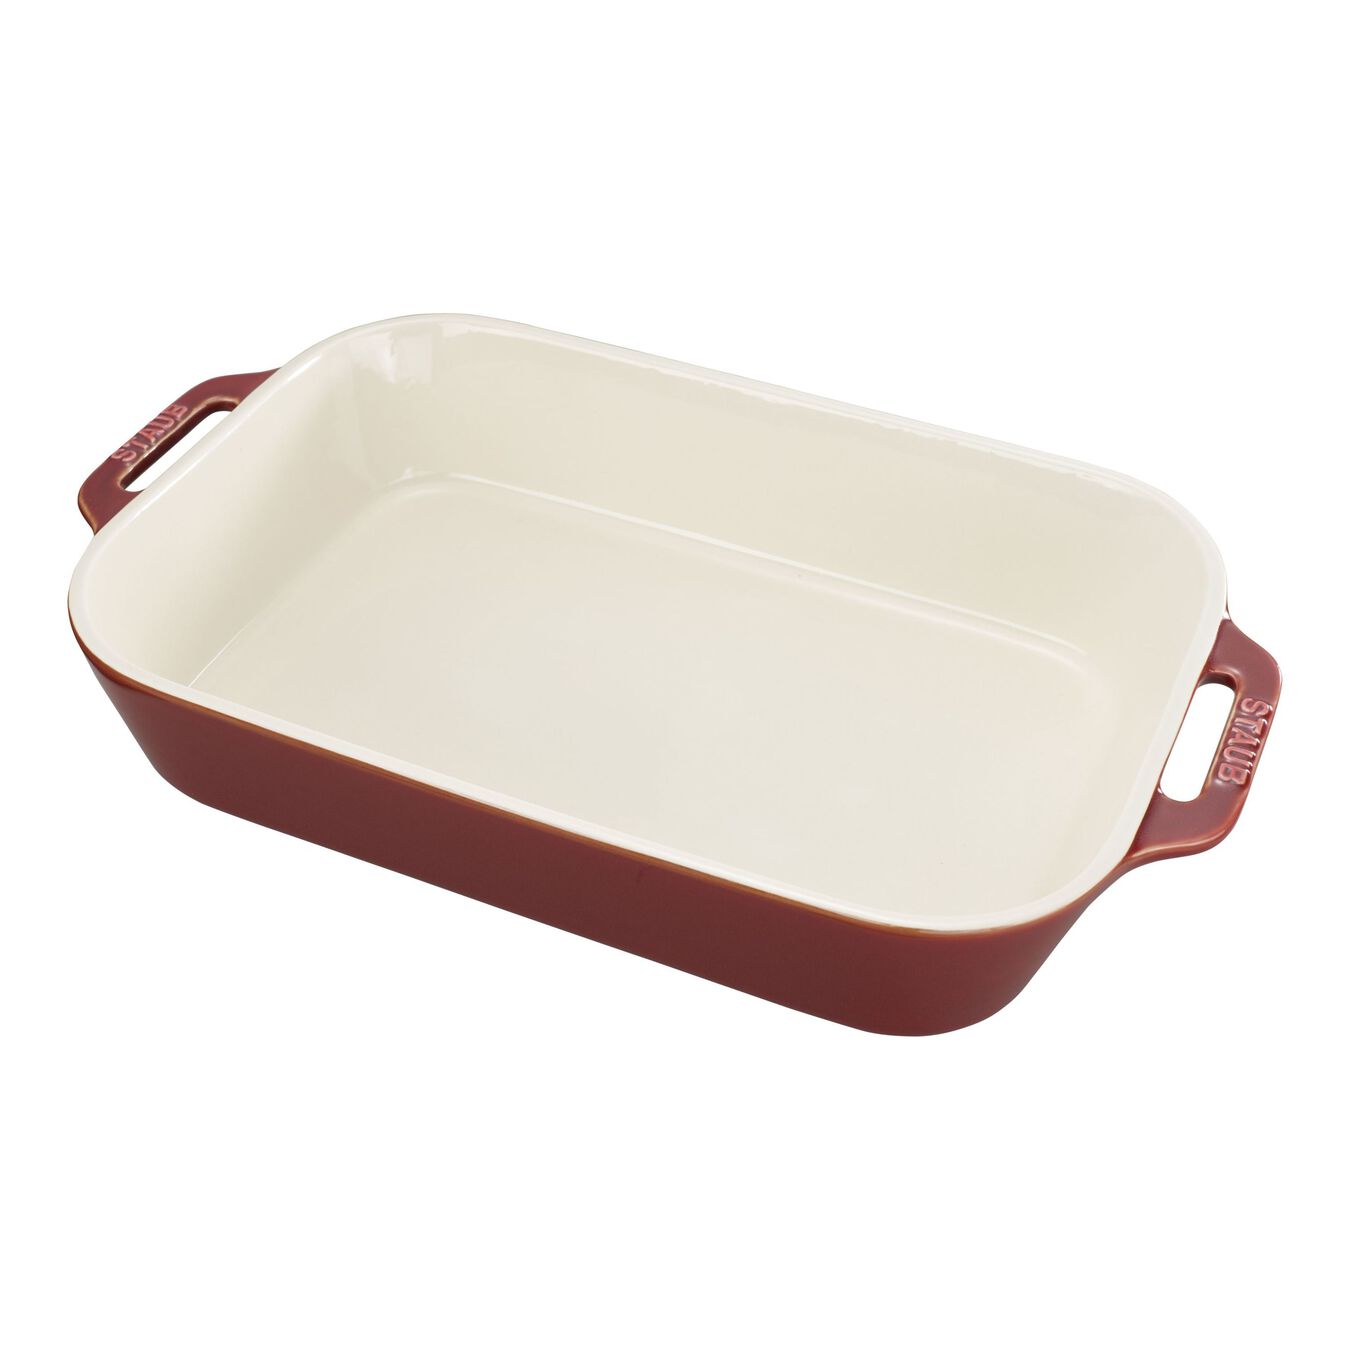 13.5-x 9.45 inch, rectangular, Baking Dish, rustic red,,large 1